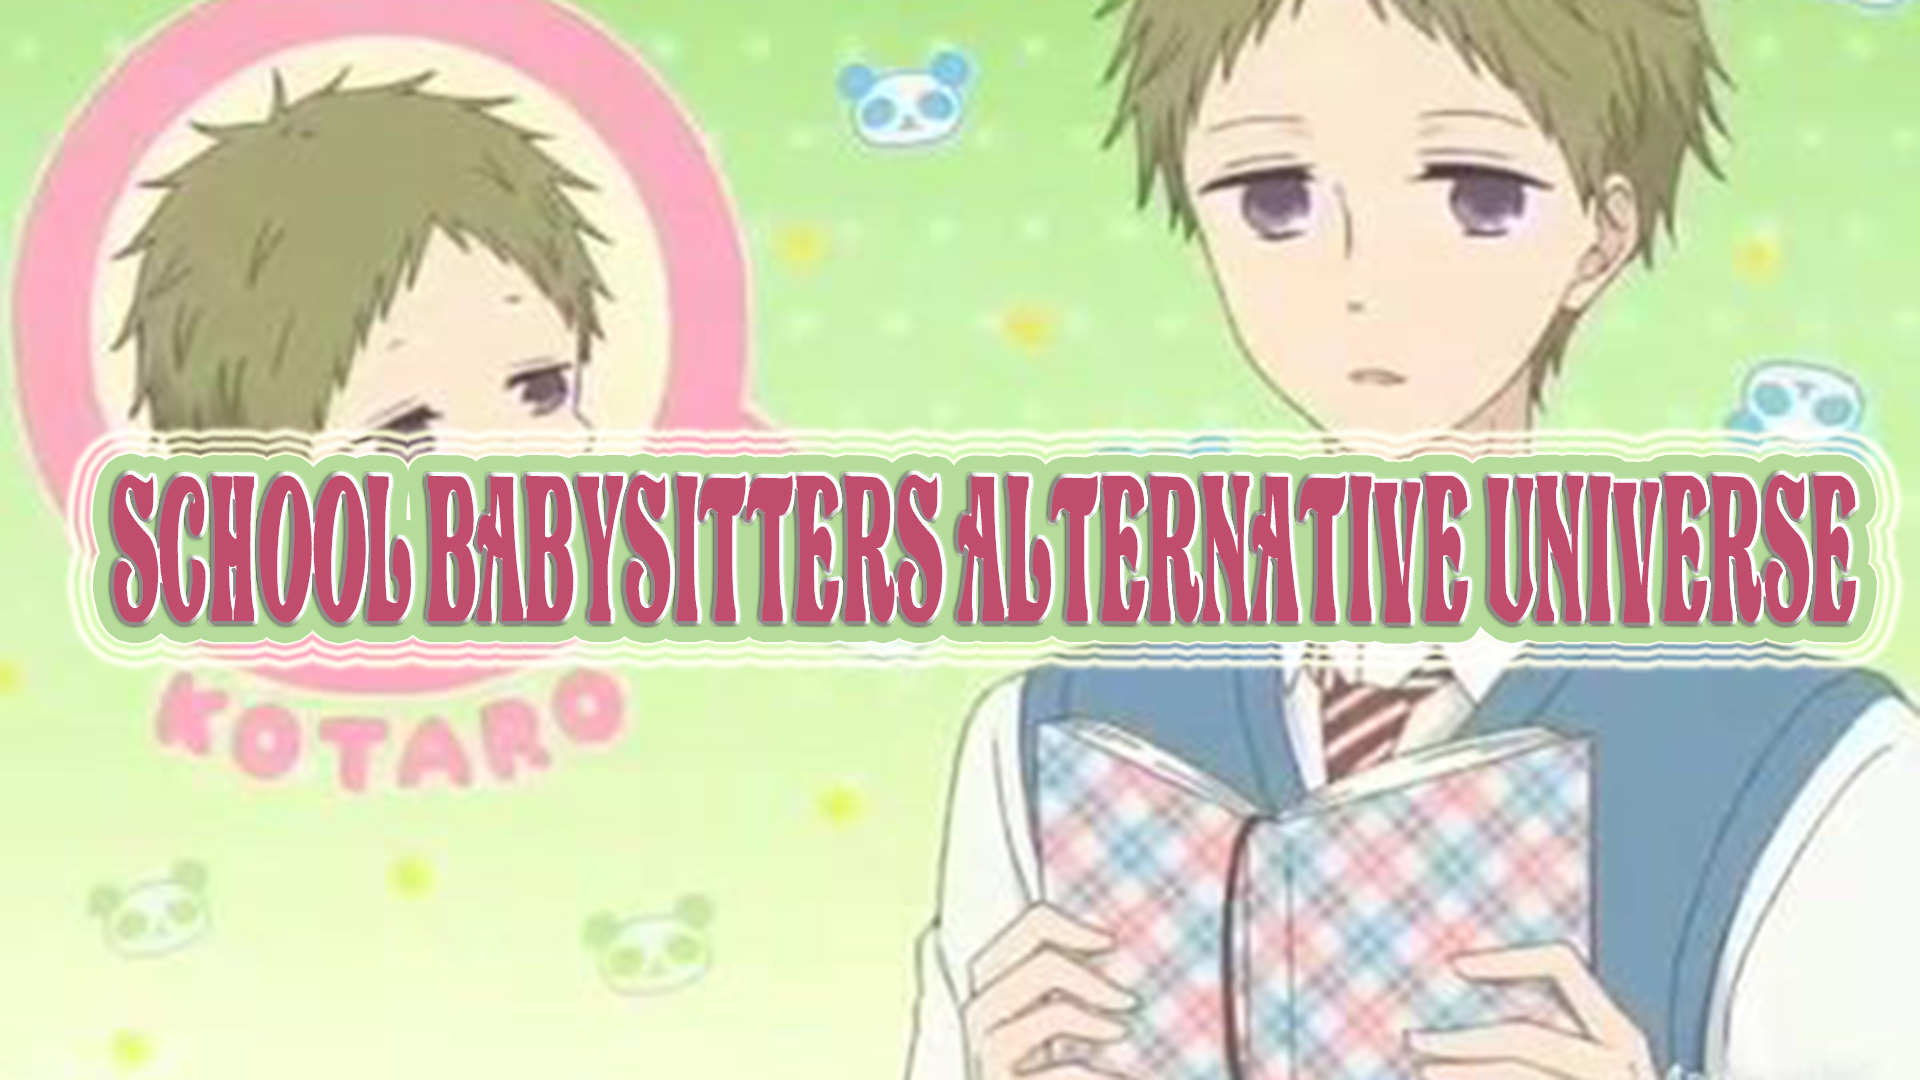 Multi Anime memes and pics (Mostly Bnha) - School babysitters❣️ - Wattpad